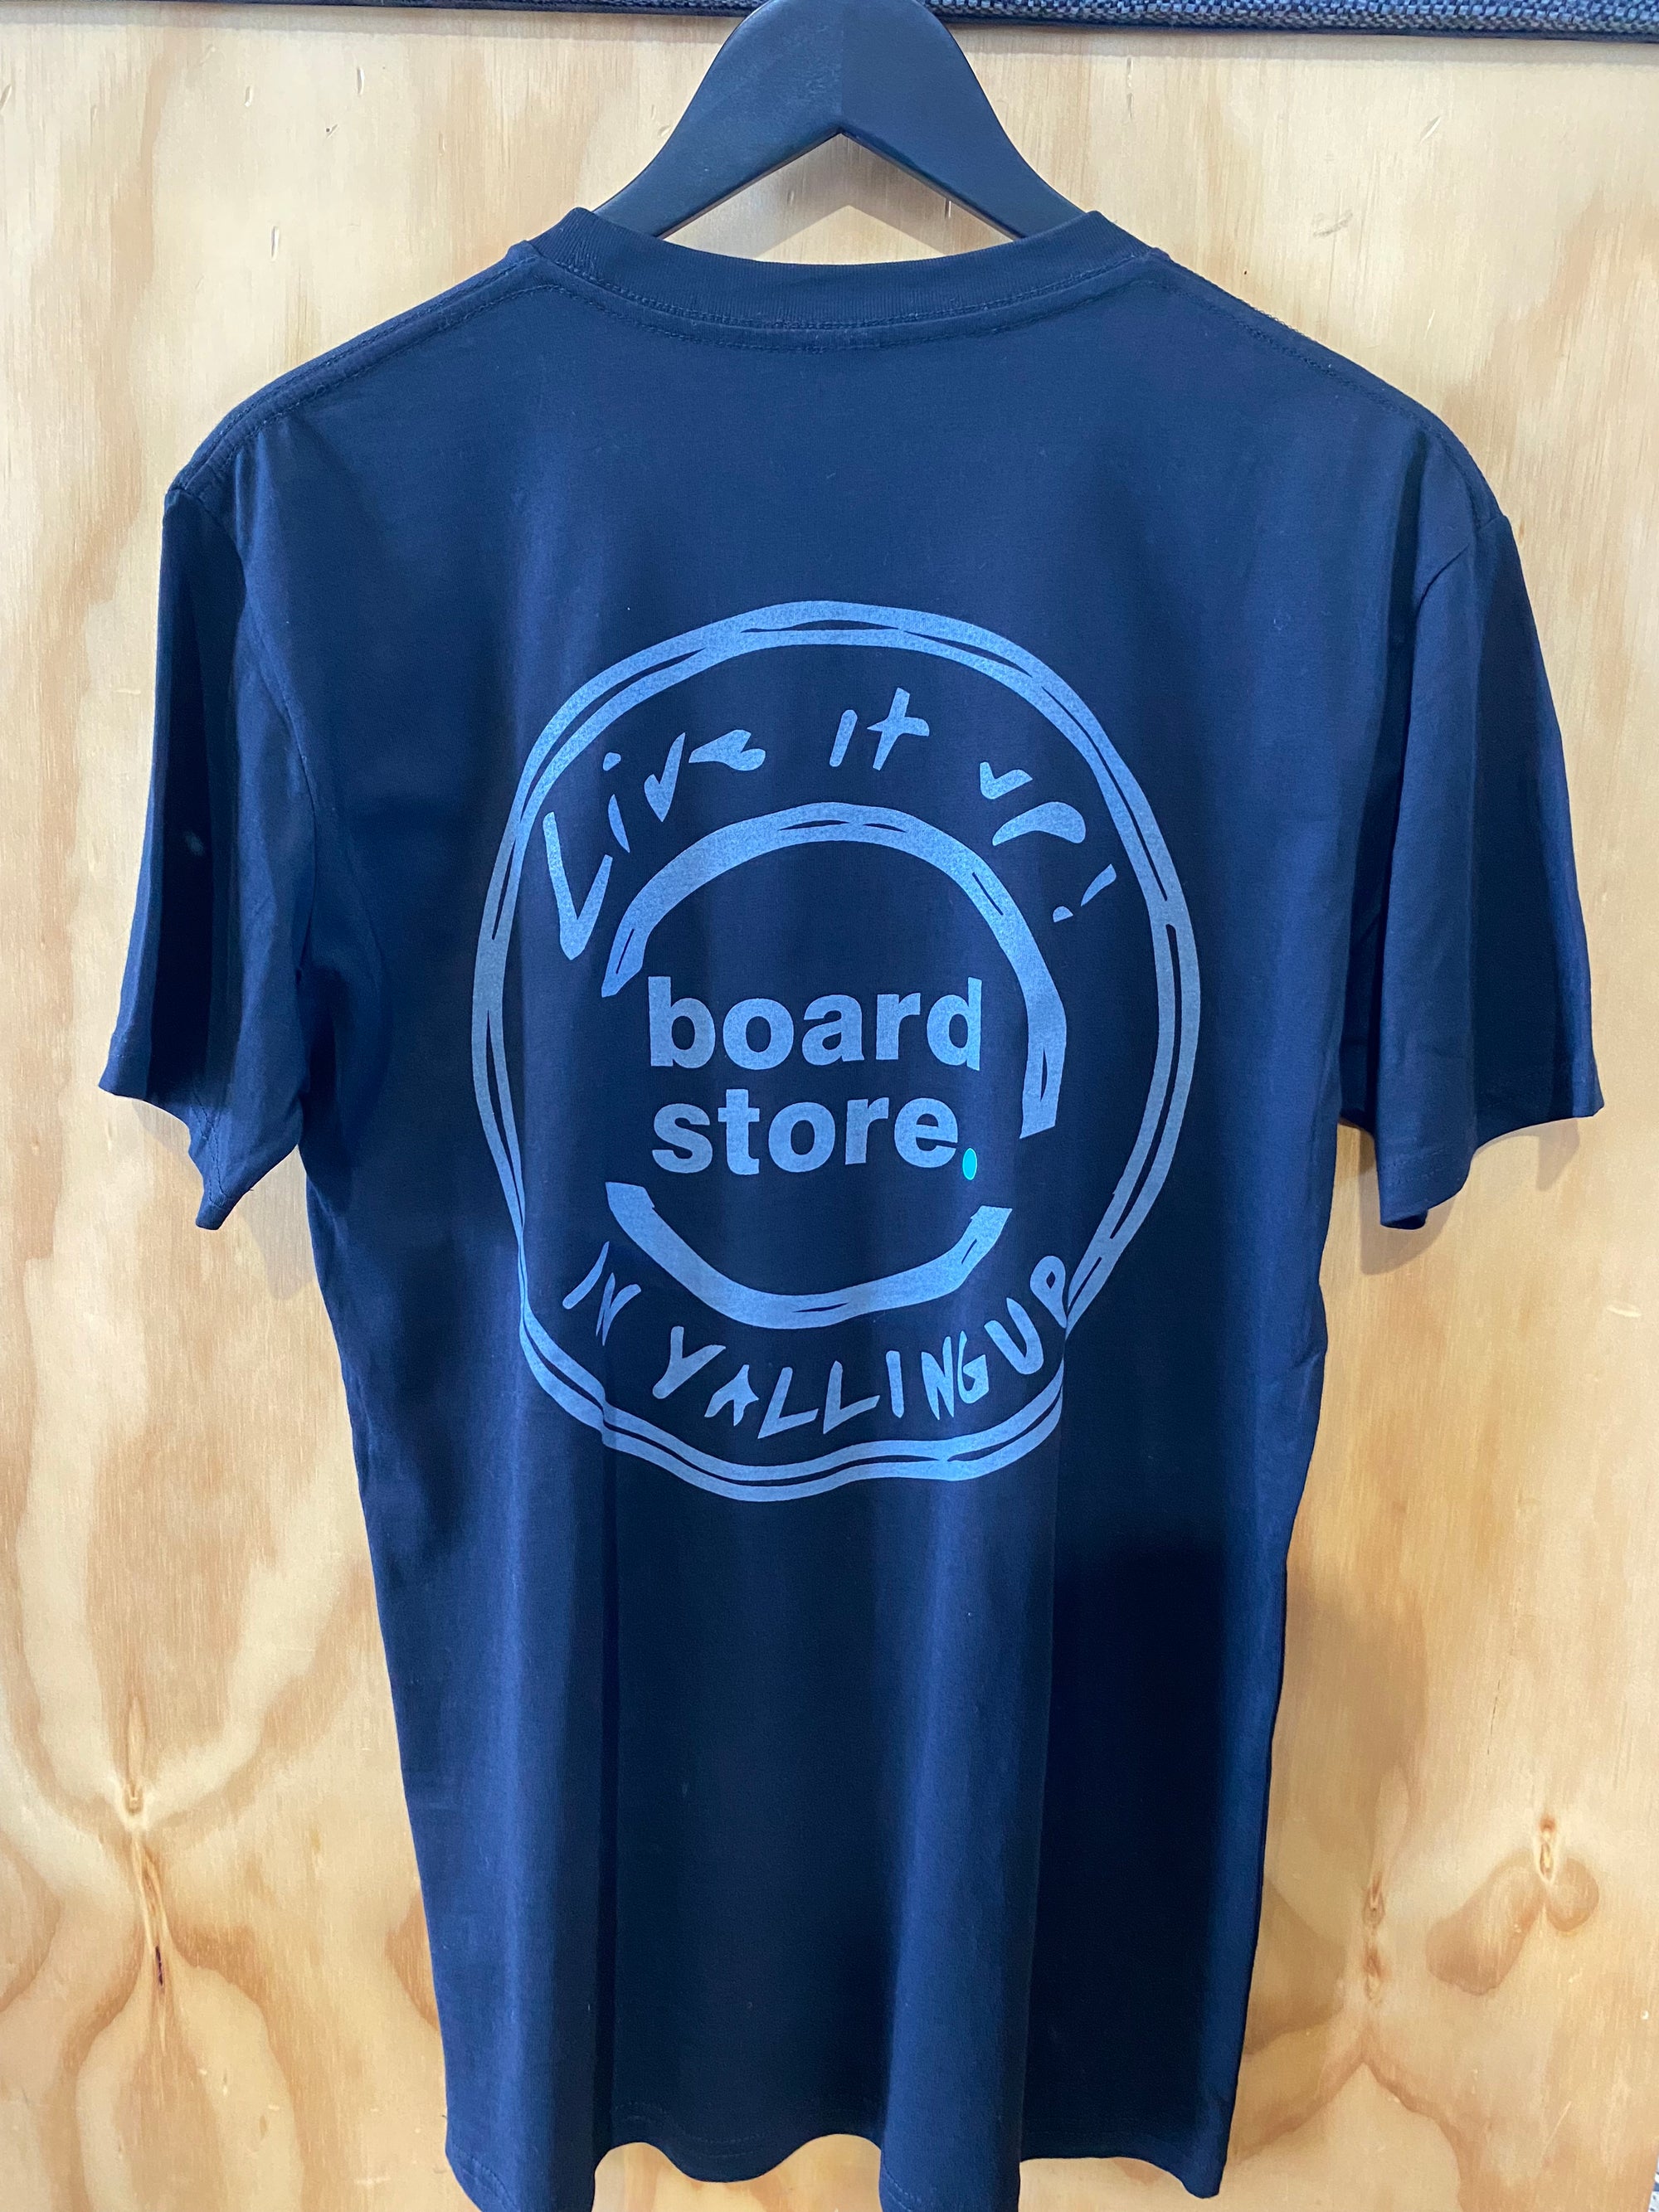 Boardstore 'live it up in yallingup' Tee (GROM)- BLACK - Board Store Board StoreTee Shirt  